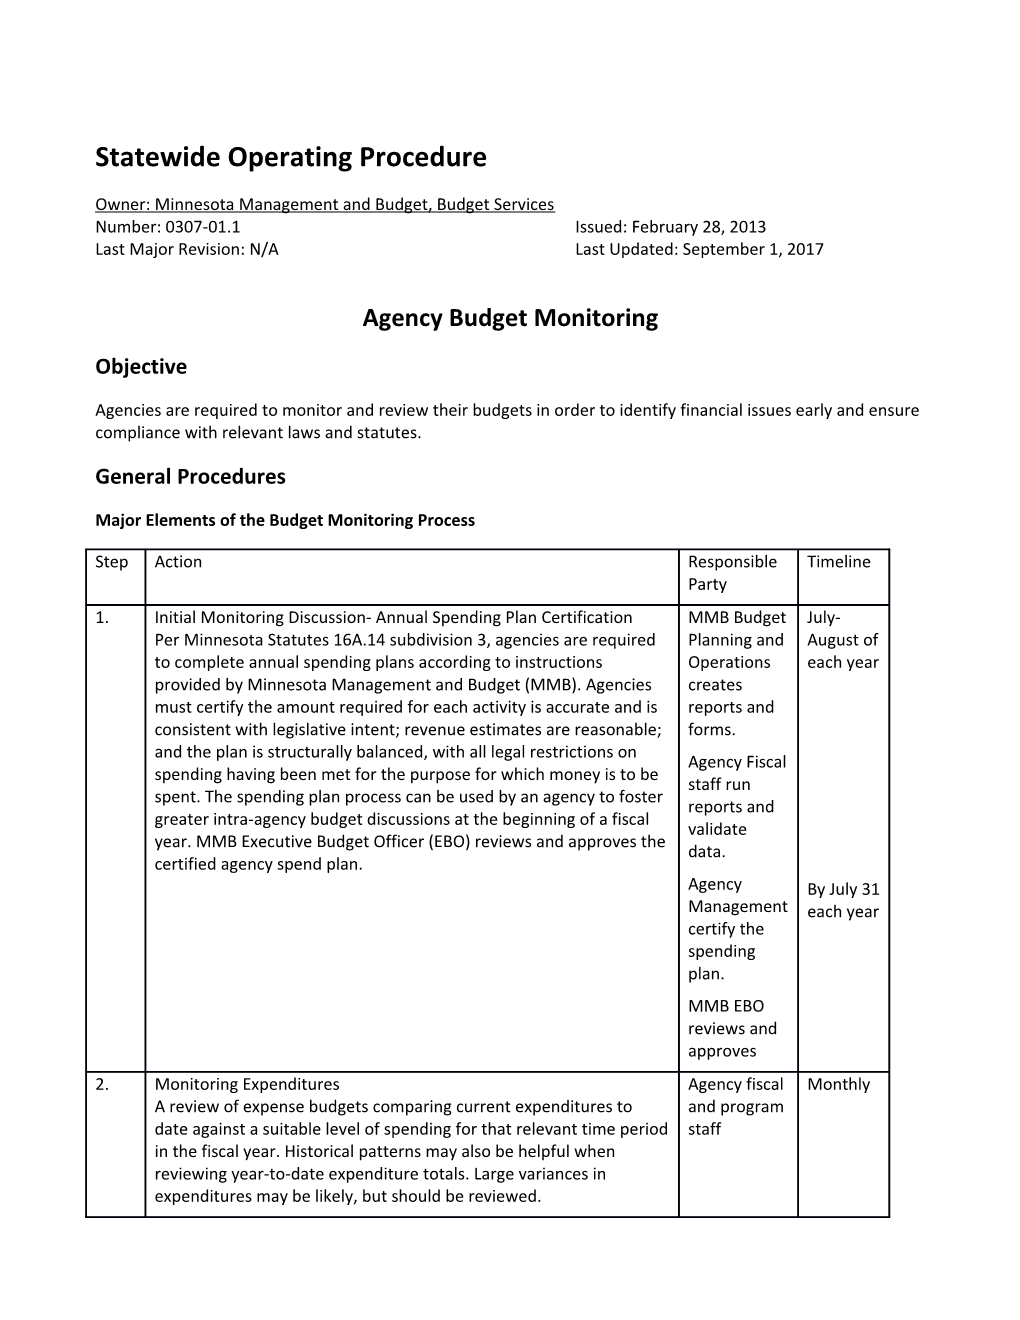 0307-01.1 Agency Budget Monitoring